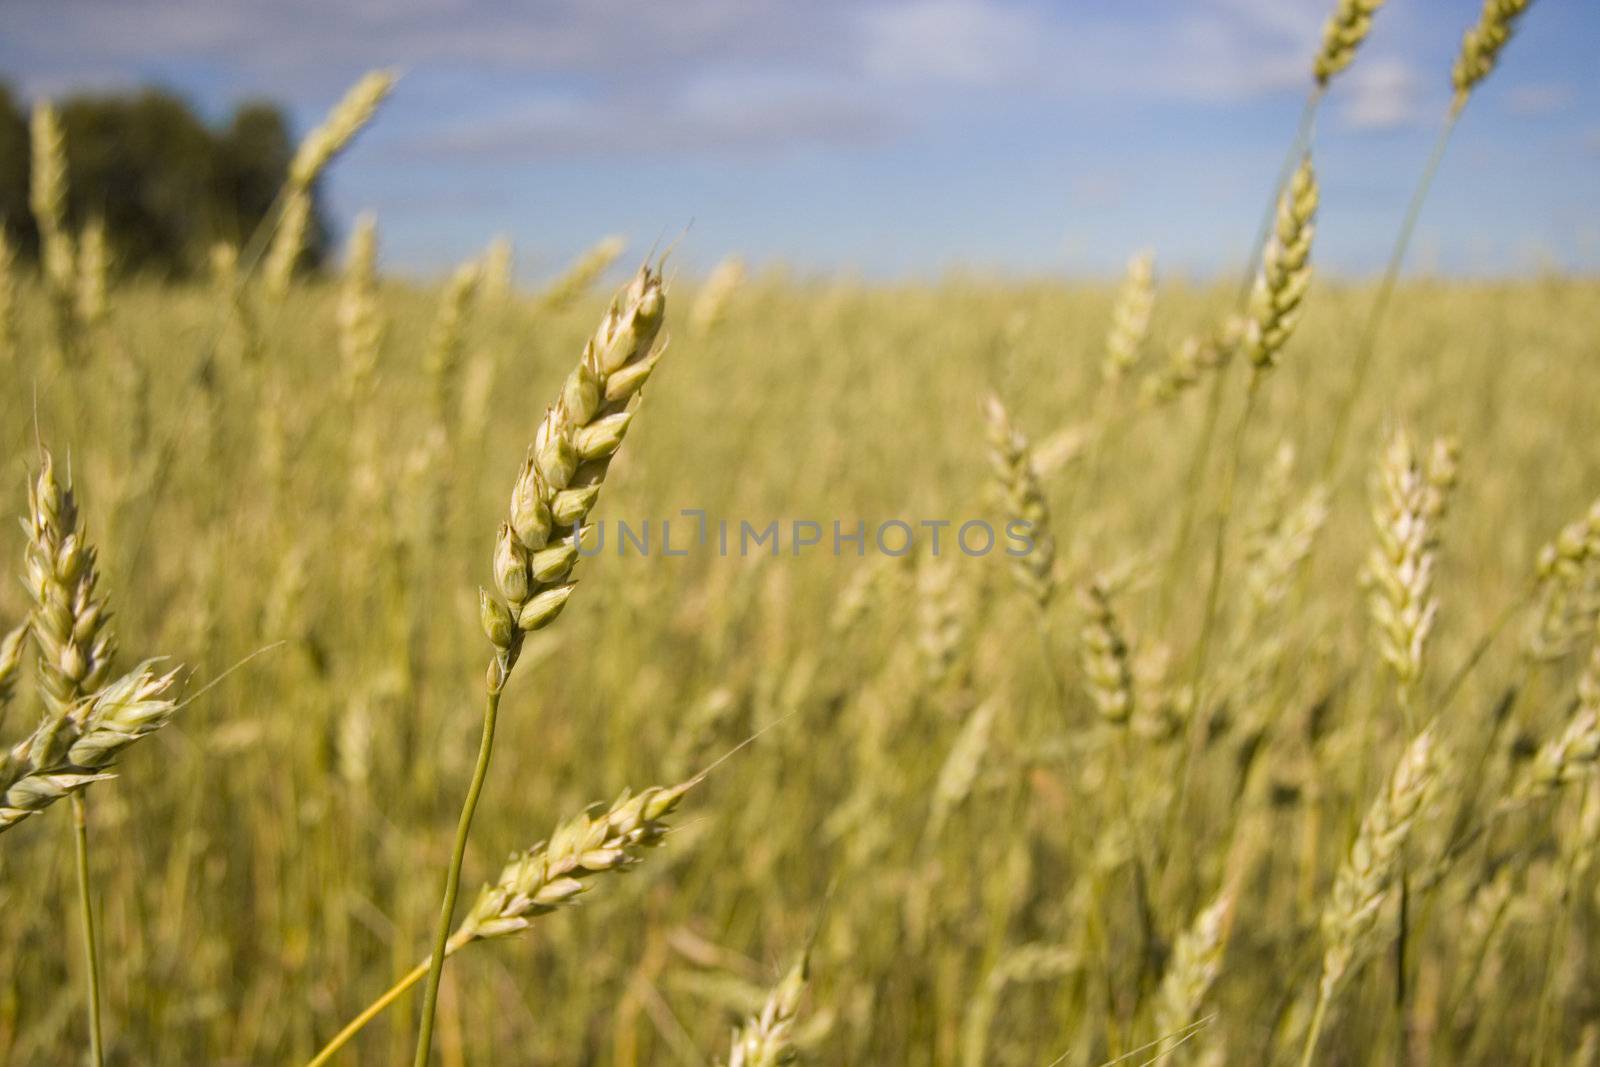 Wheat field golden and blue sky by Kudryashka